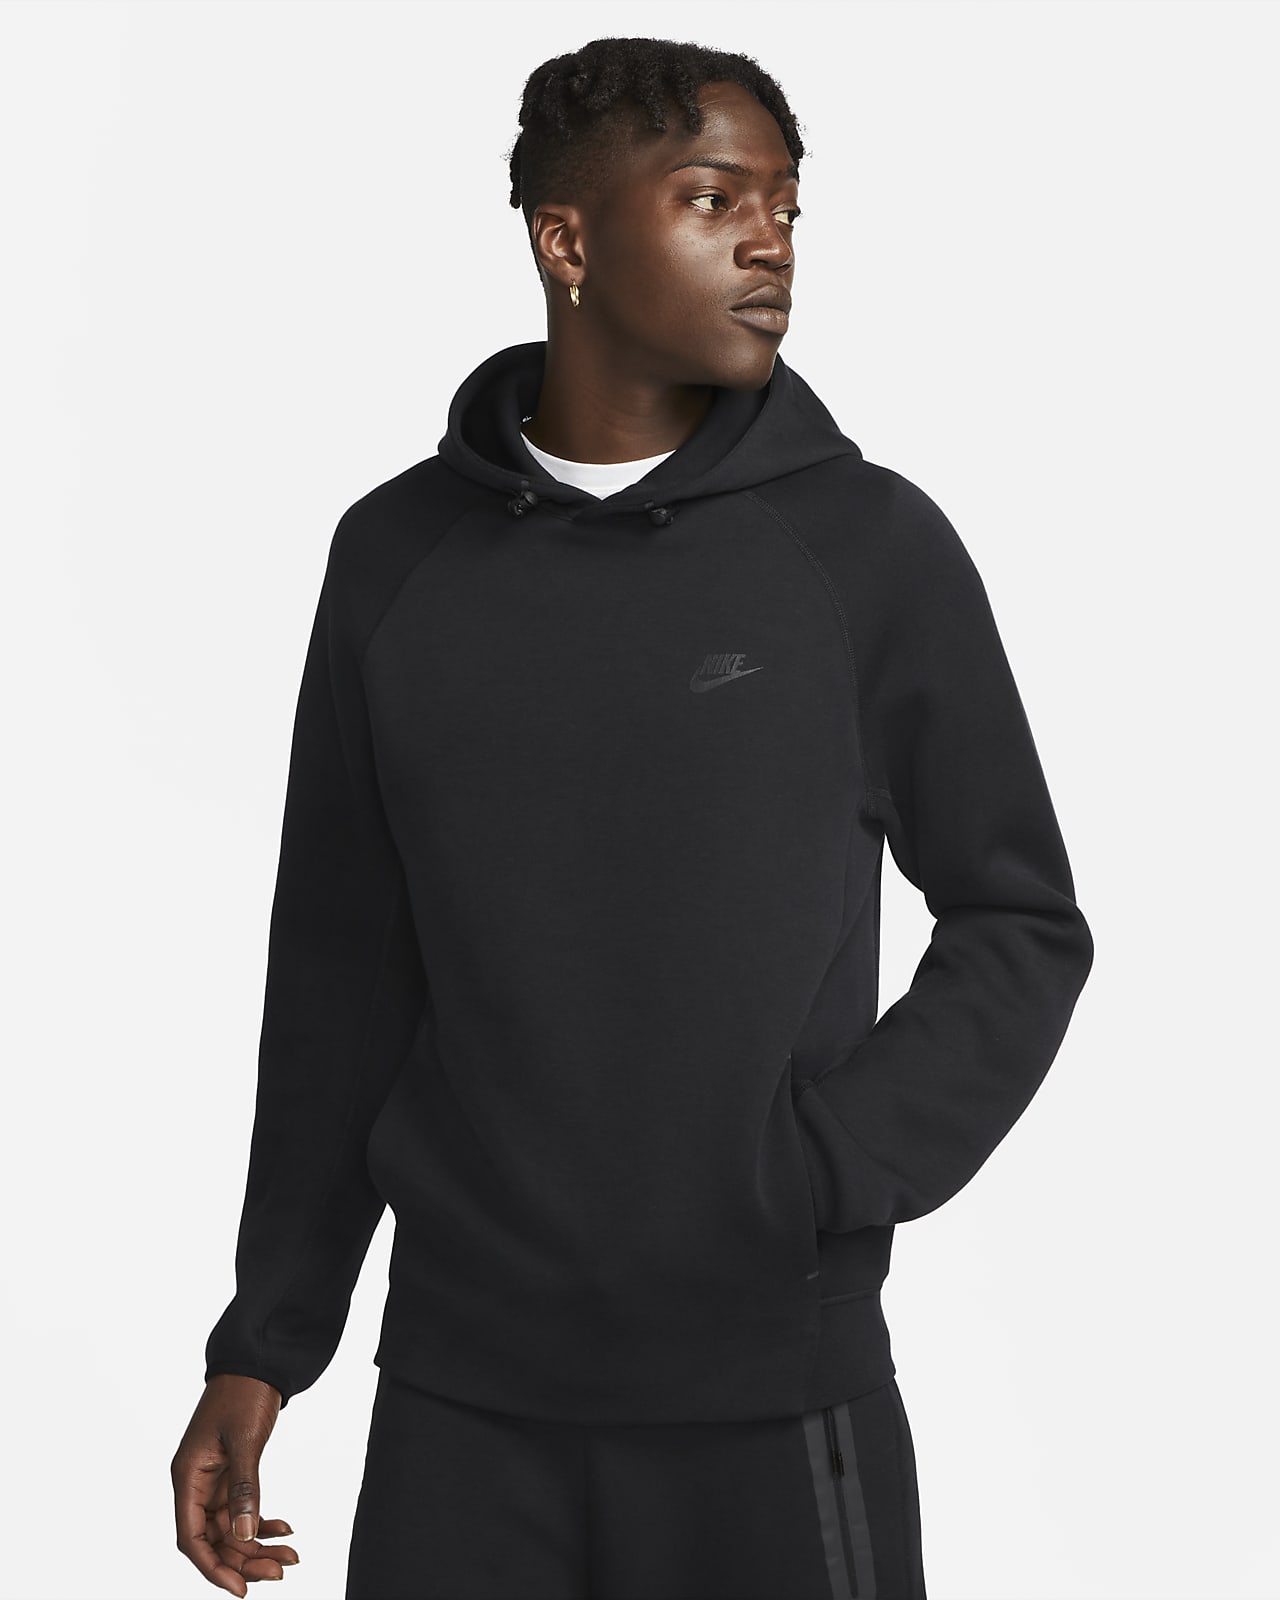 Nike Sportswear Tech Fleece Dessuadora amb caputxa - Home